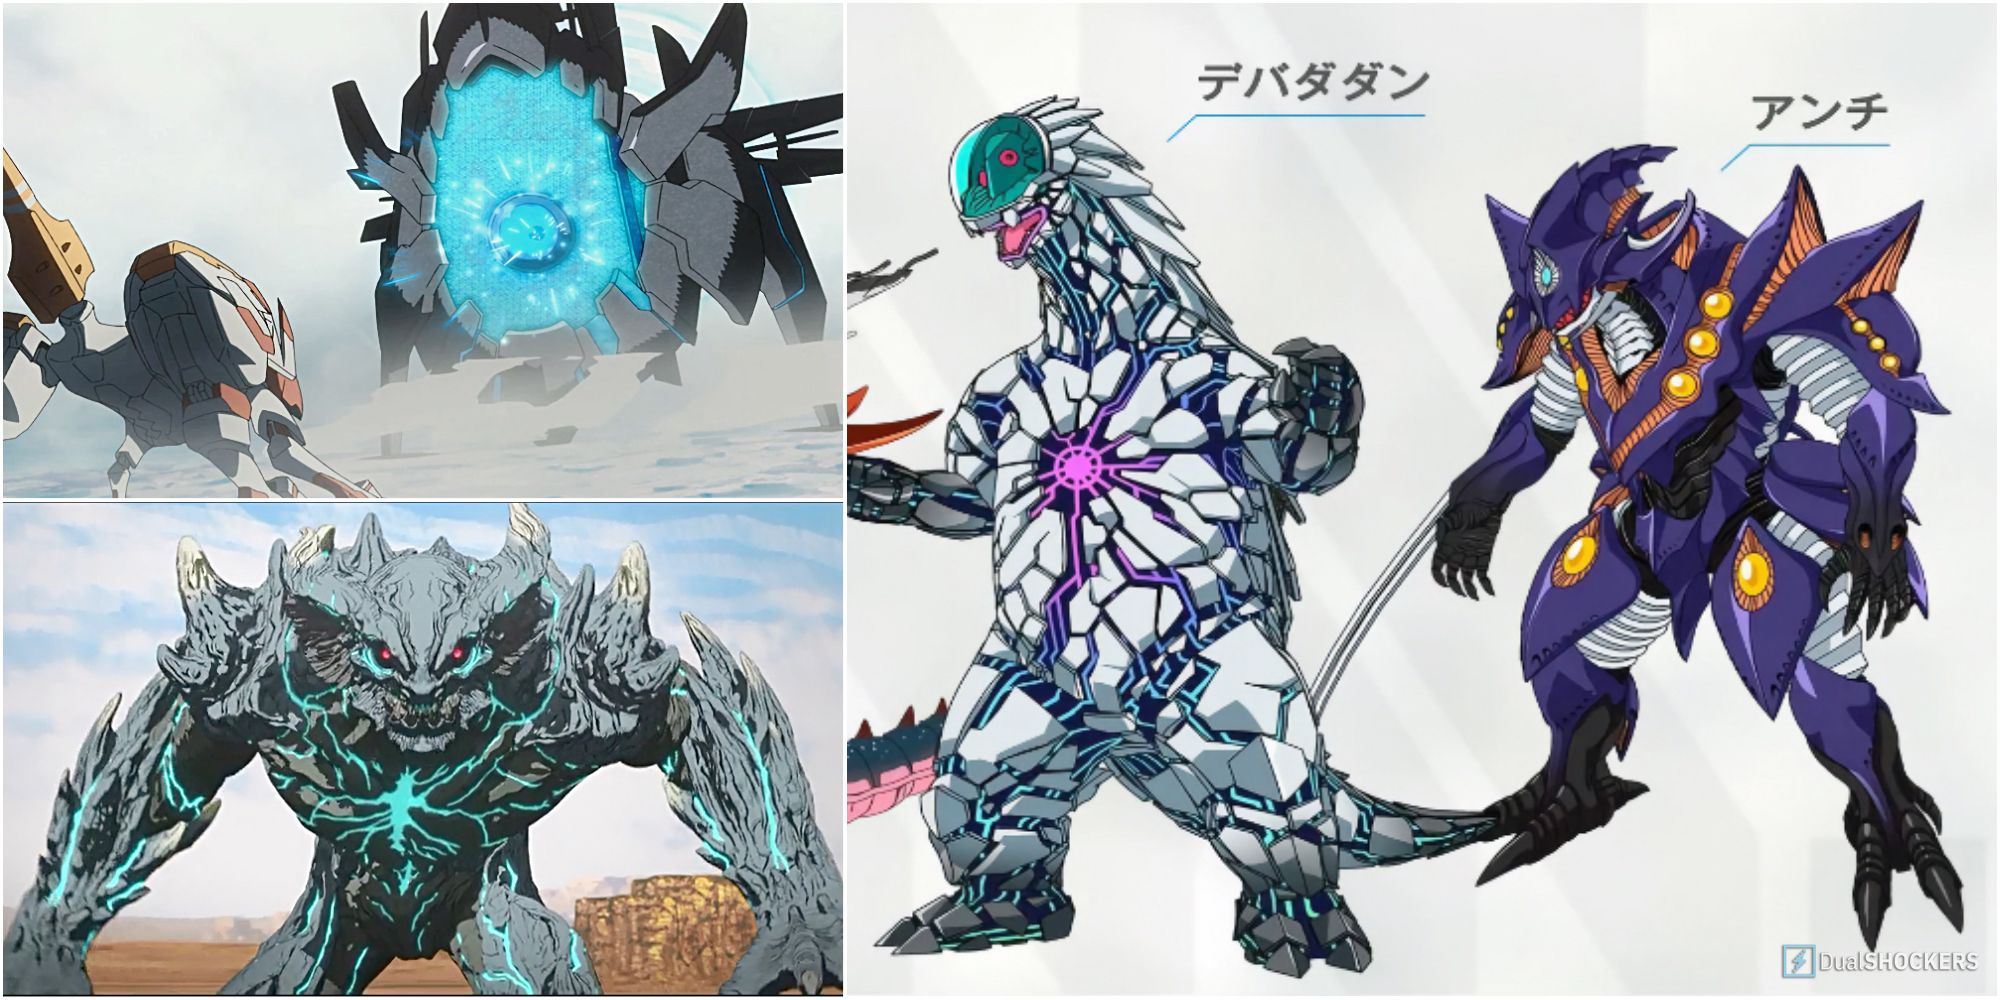 Kaiju no. 8 anime will be streaming on 